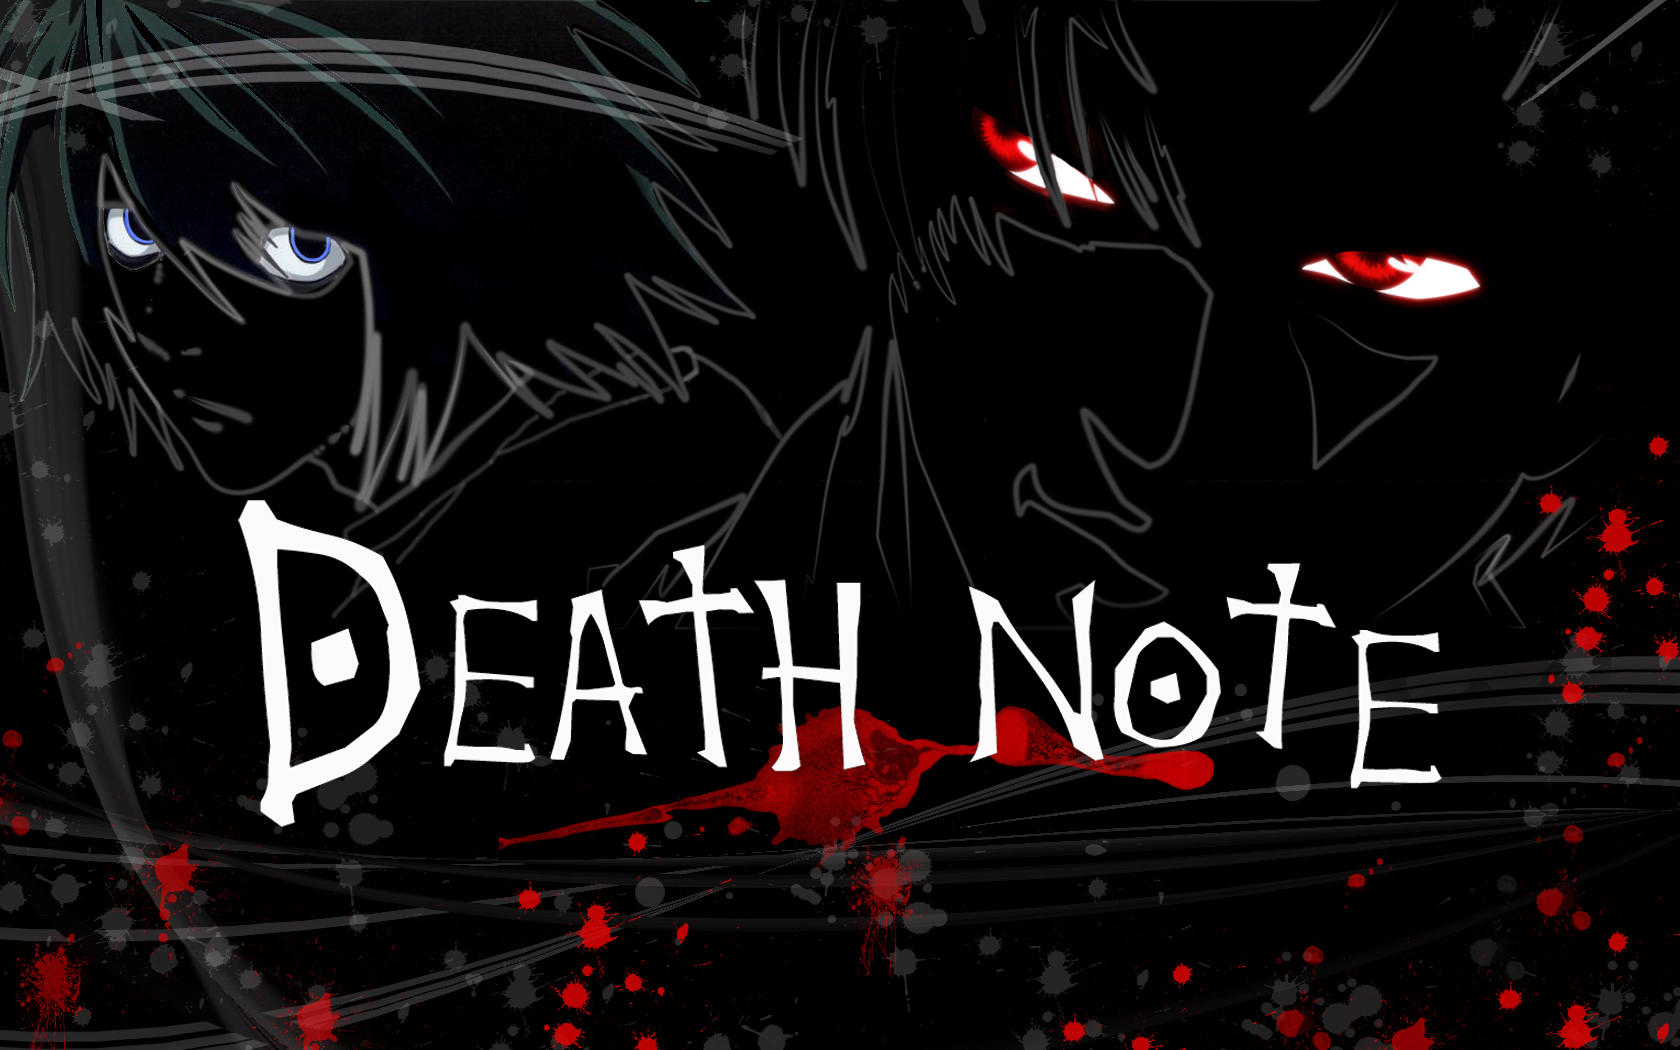 death note tsugumi ohba takshi obata manga anime arte filme netflix (1)